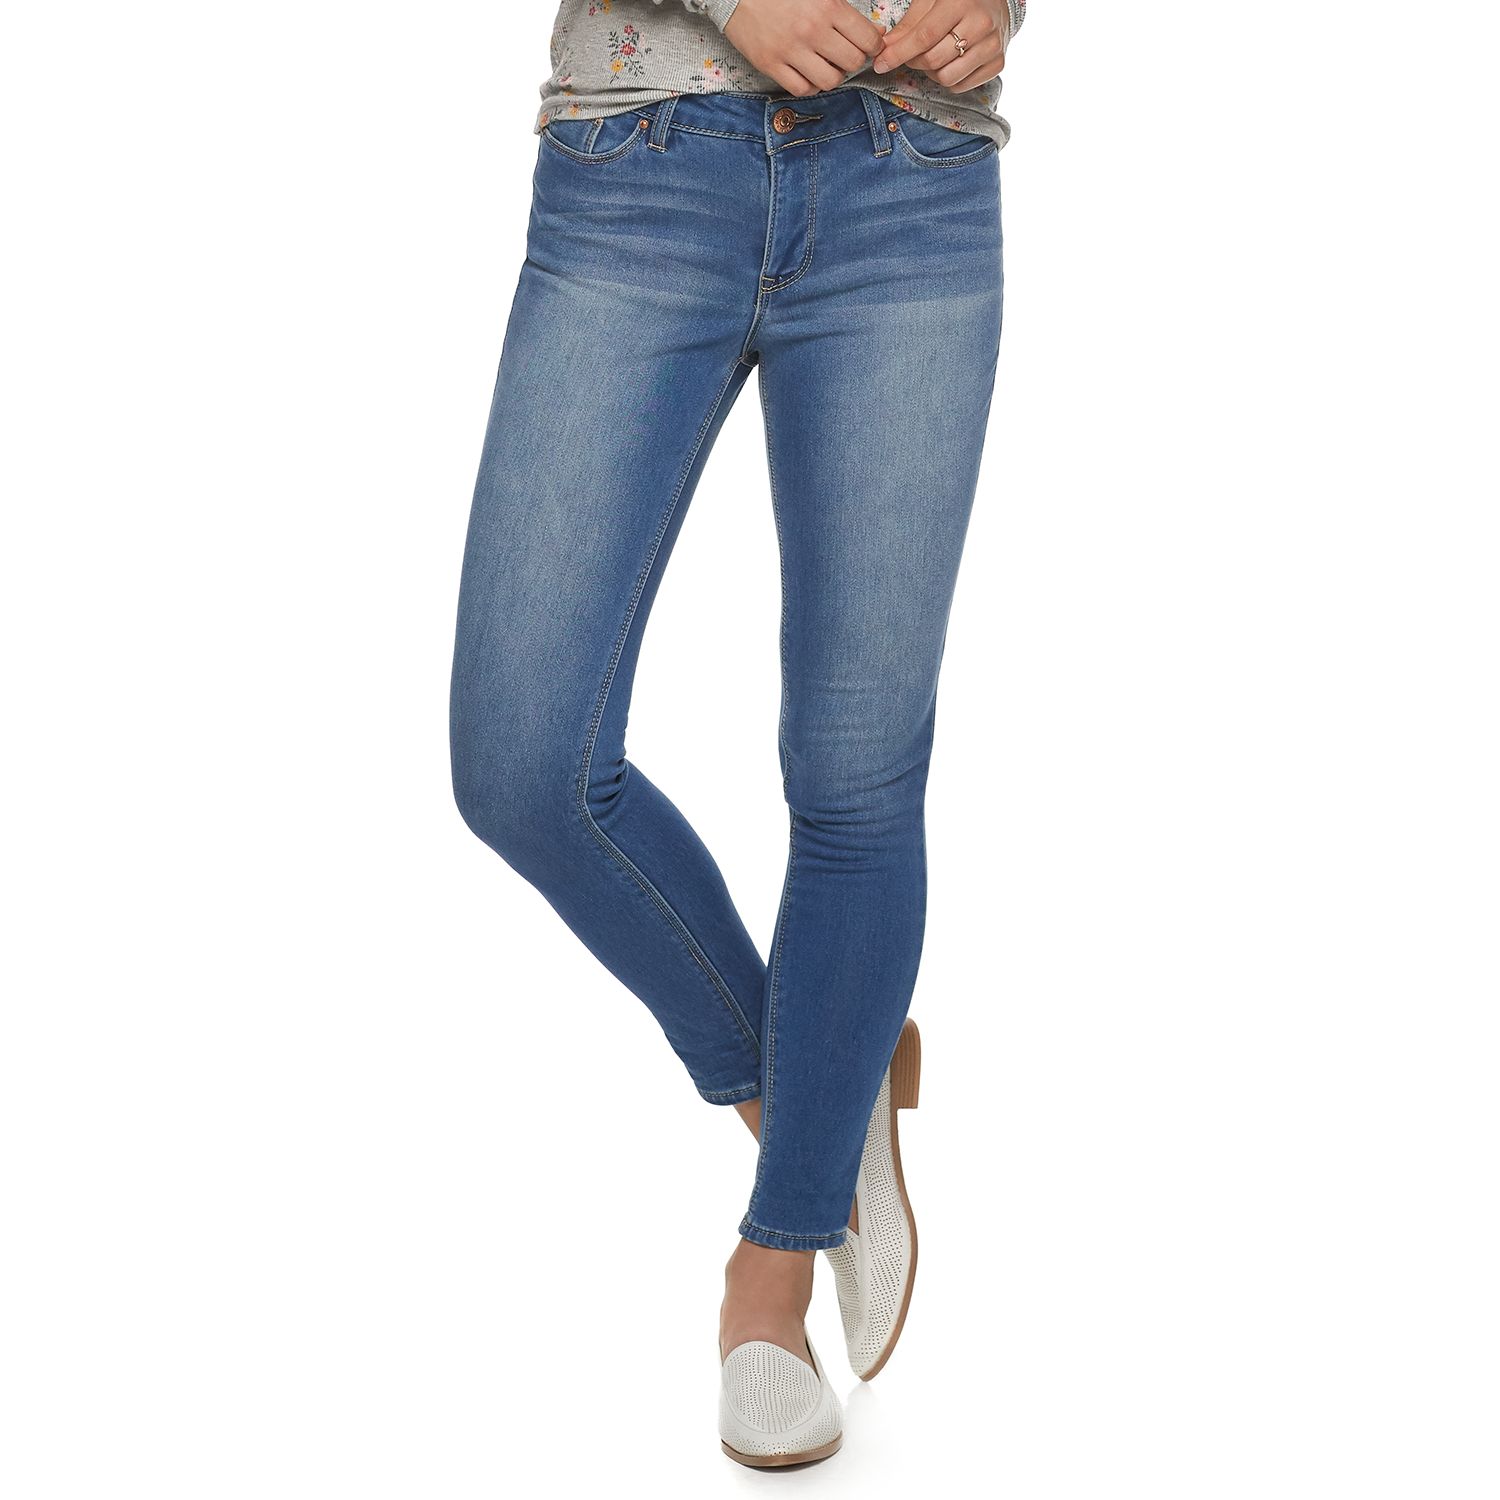 women's cream colored skinny jeans